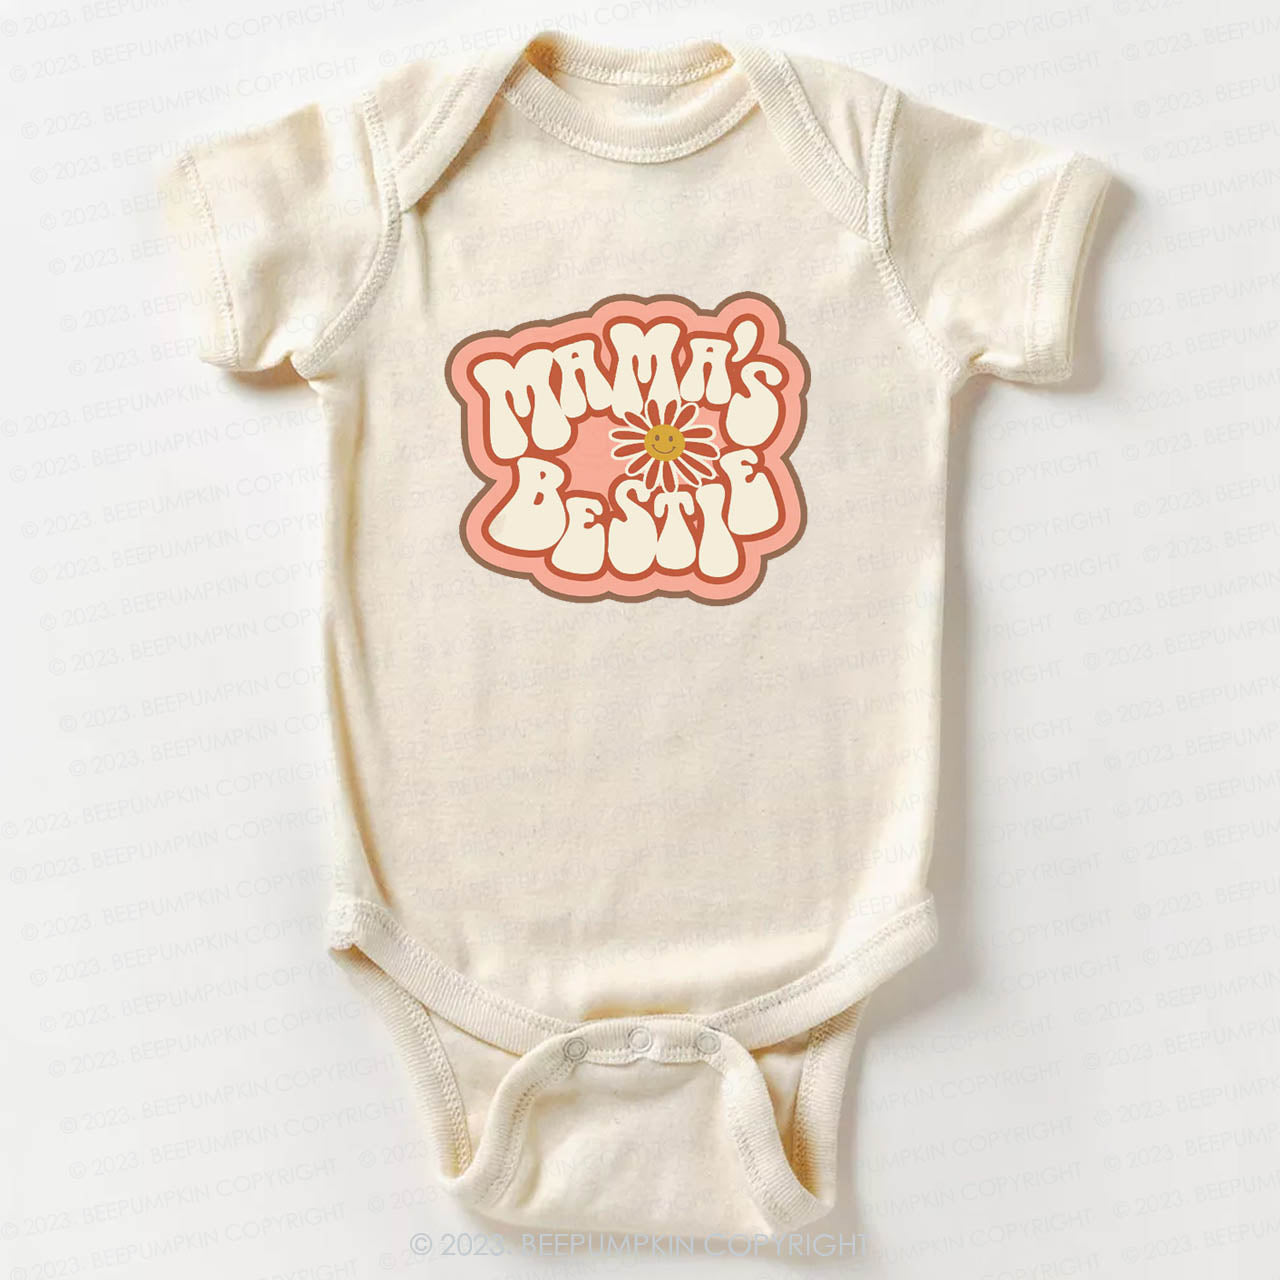 Mama's Bestie Sunflower Bodysuit For Baby